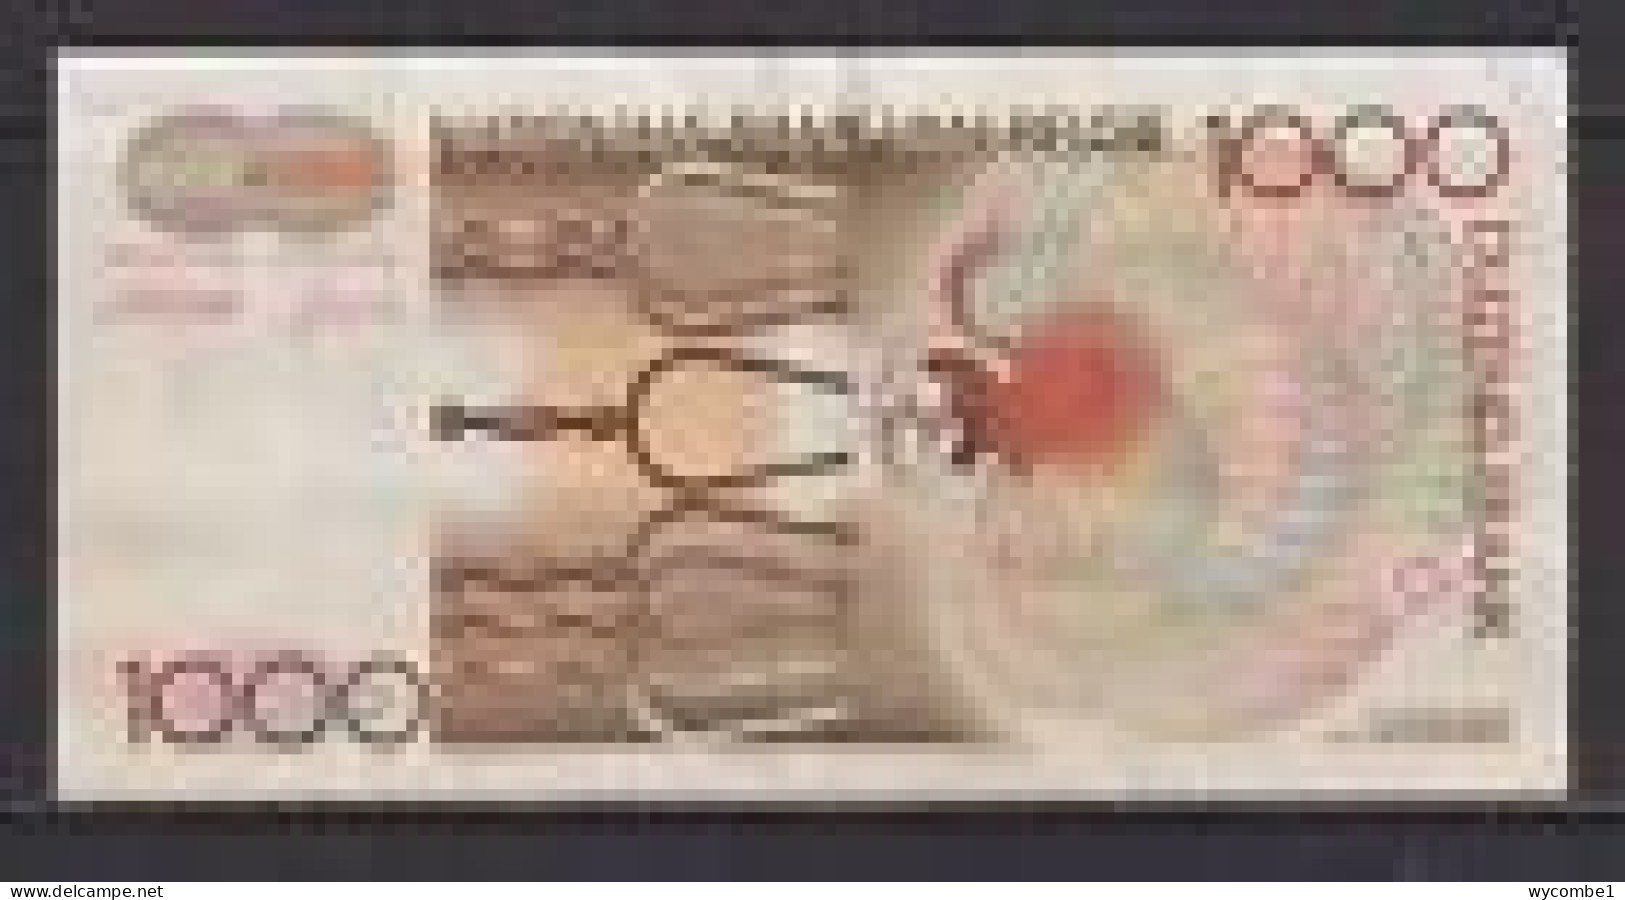 BELGIUM - 1980-1996 1000 Franc Circulated Banknote - 1000 Francos